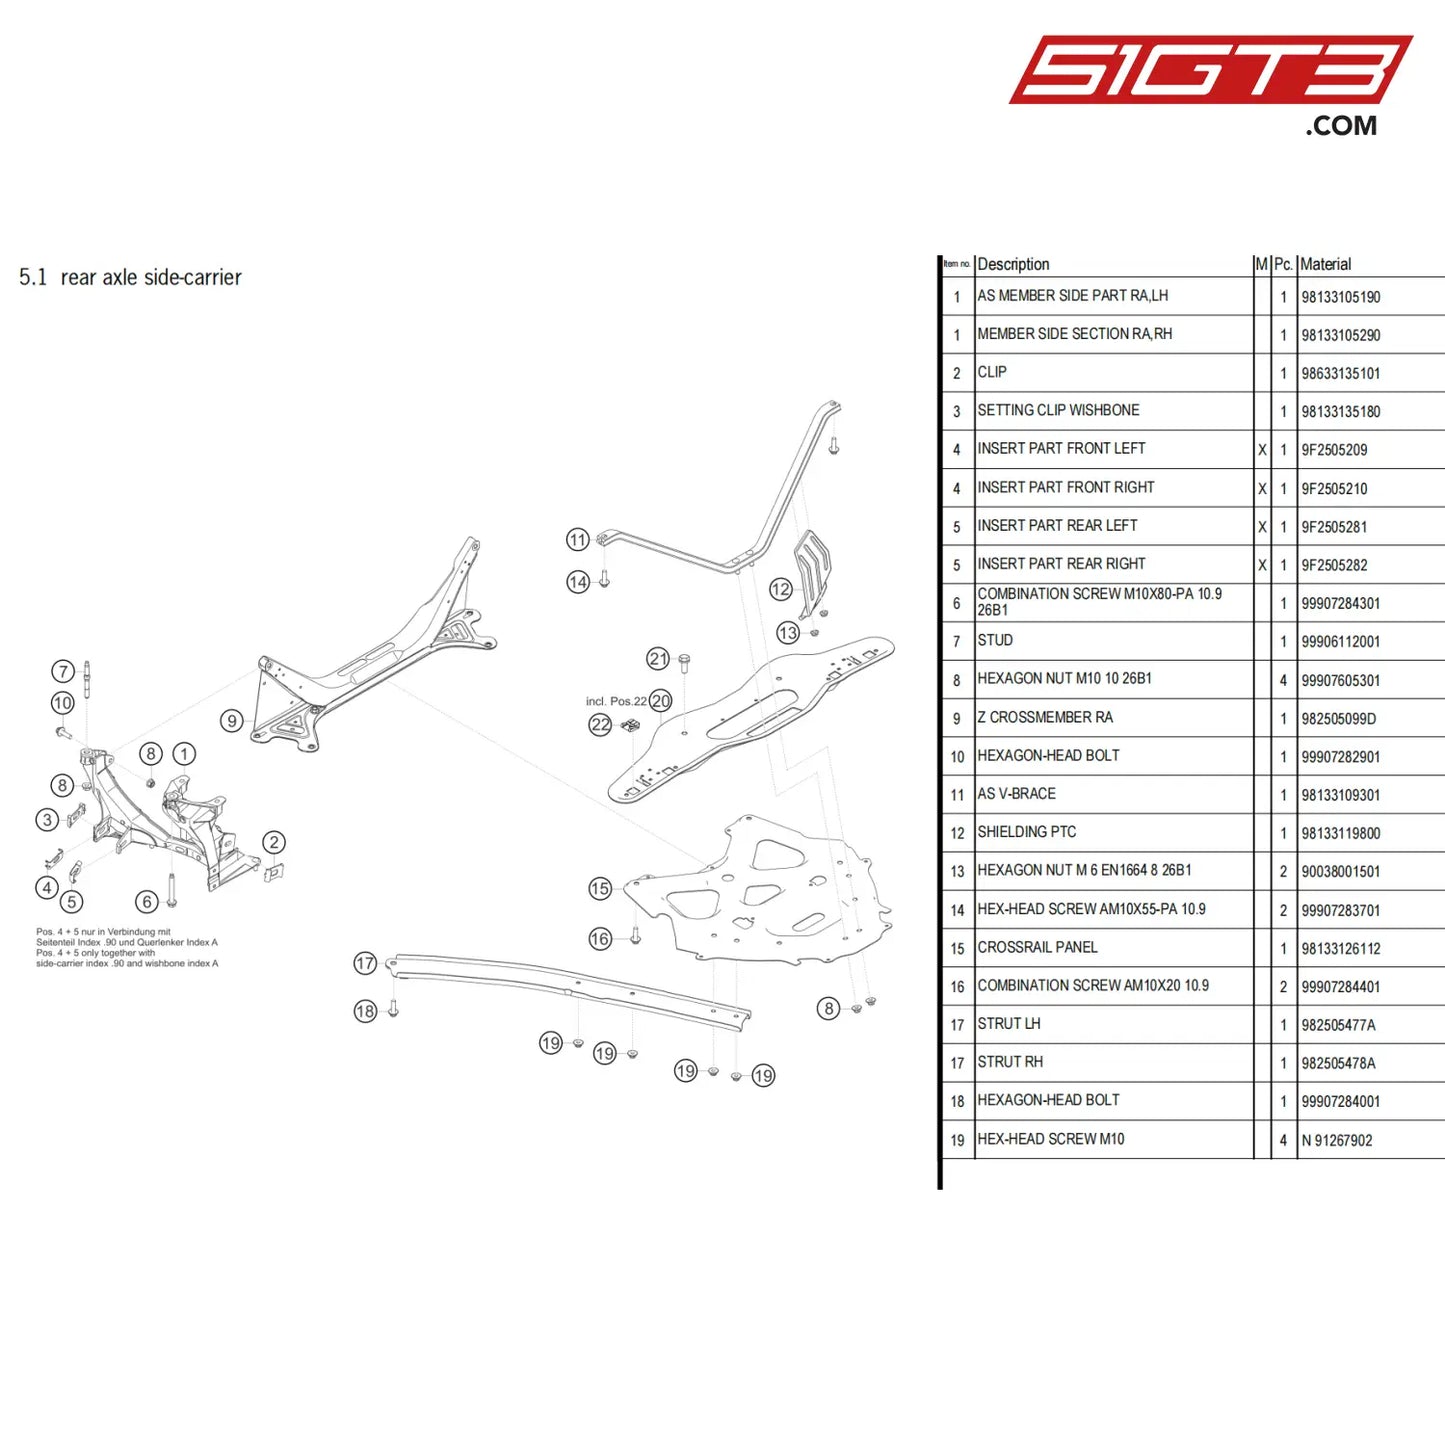 Member Side Section Ra Rh - 98133105290 [Porsche 718 Cayman Gt4 Clubsport] Rear Axle Side-Carrier